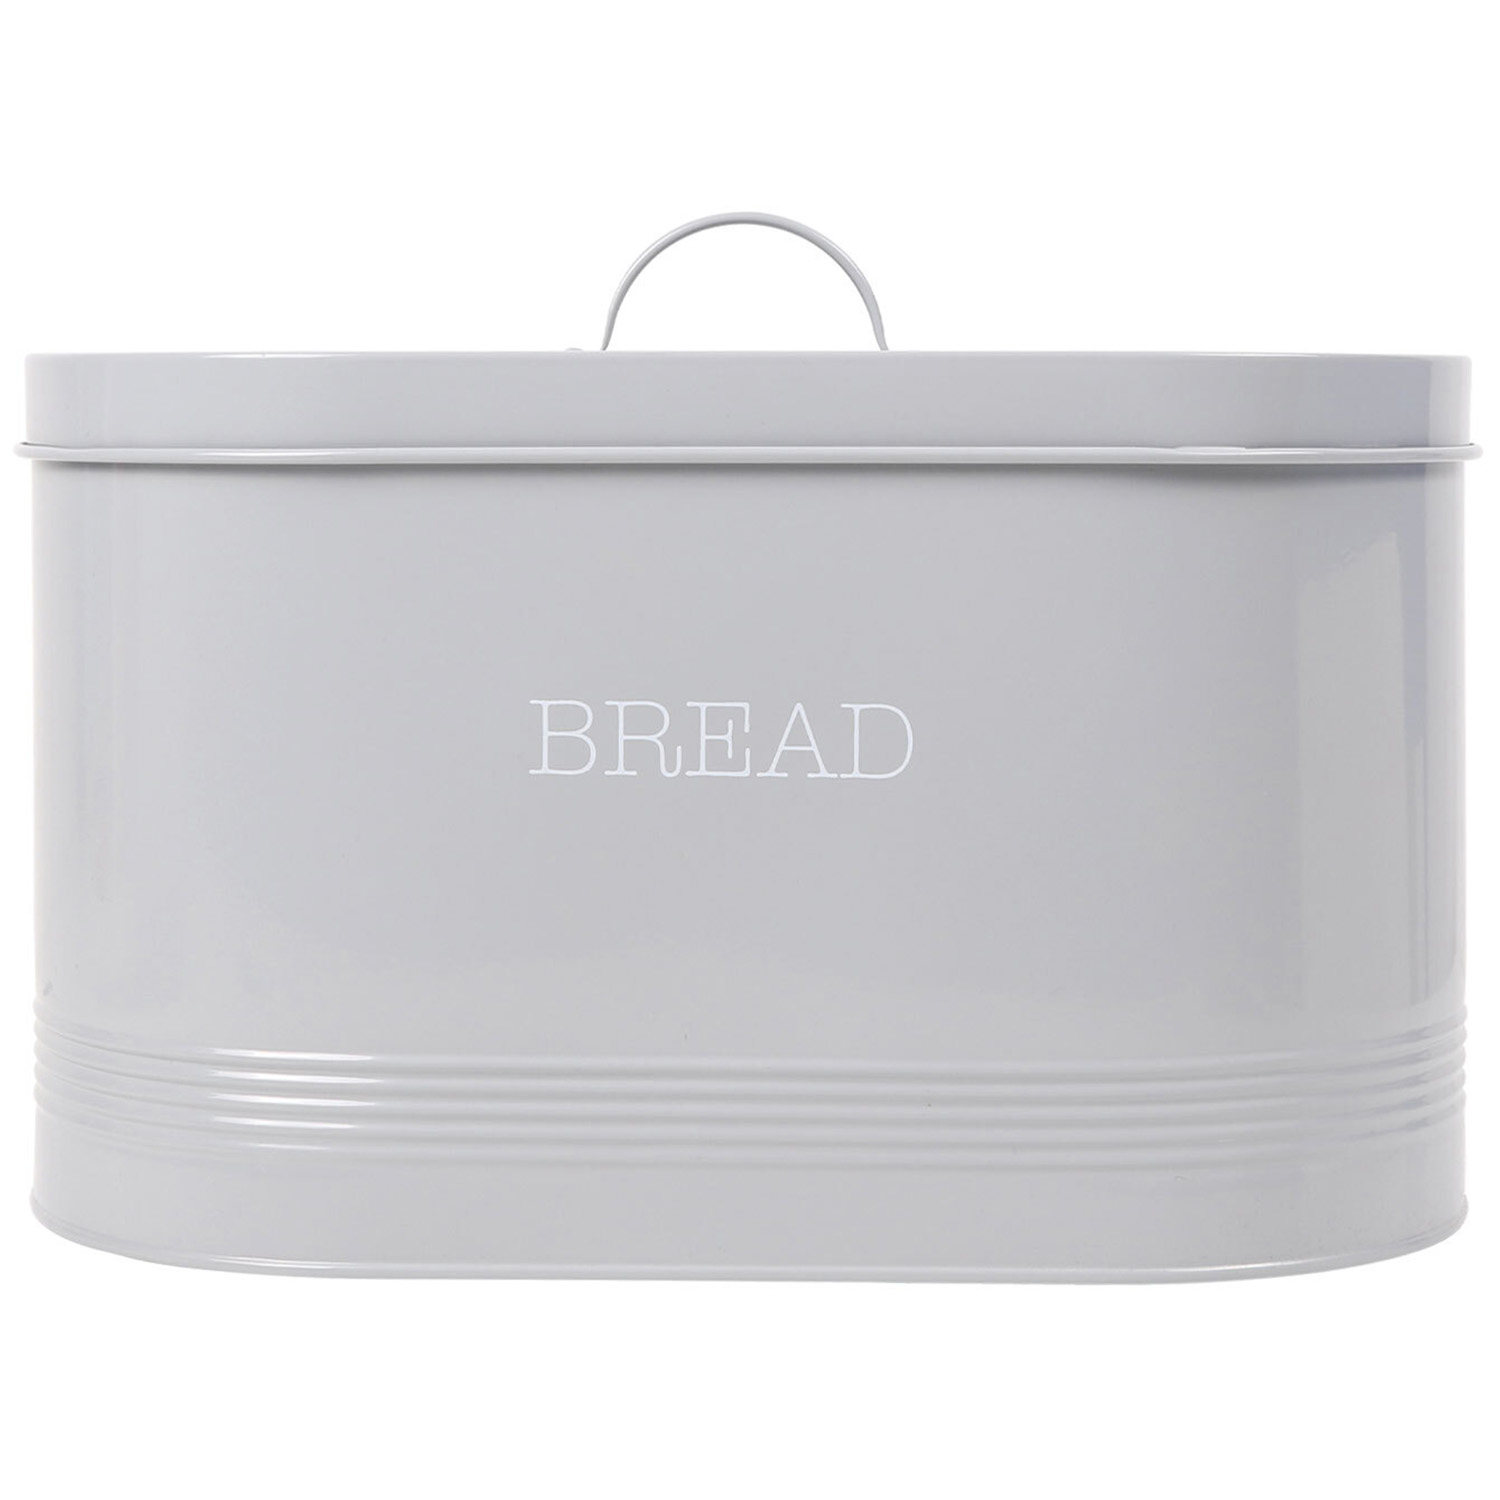 Grey Ribbed Oval Bread Bin Image